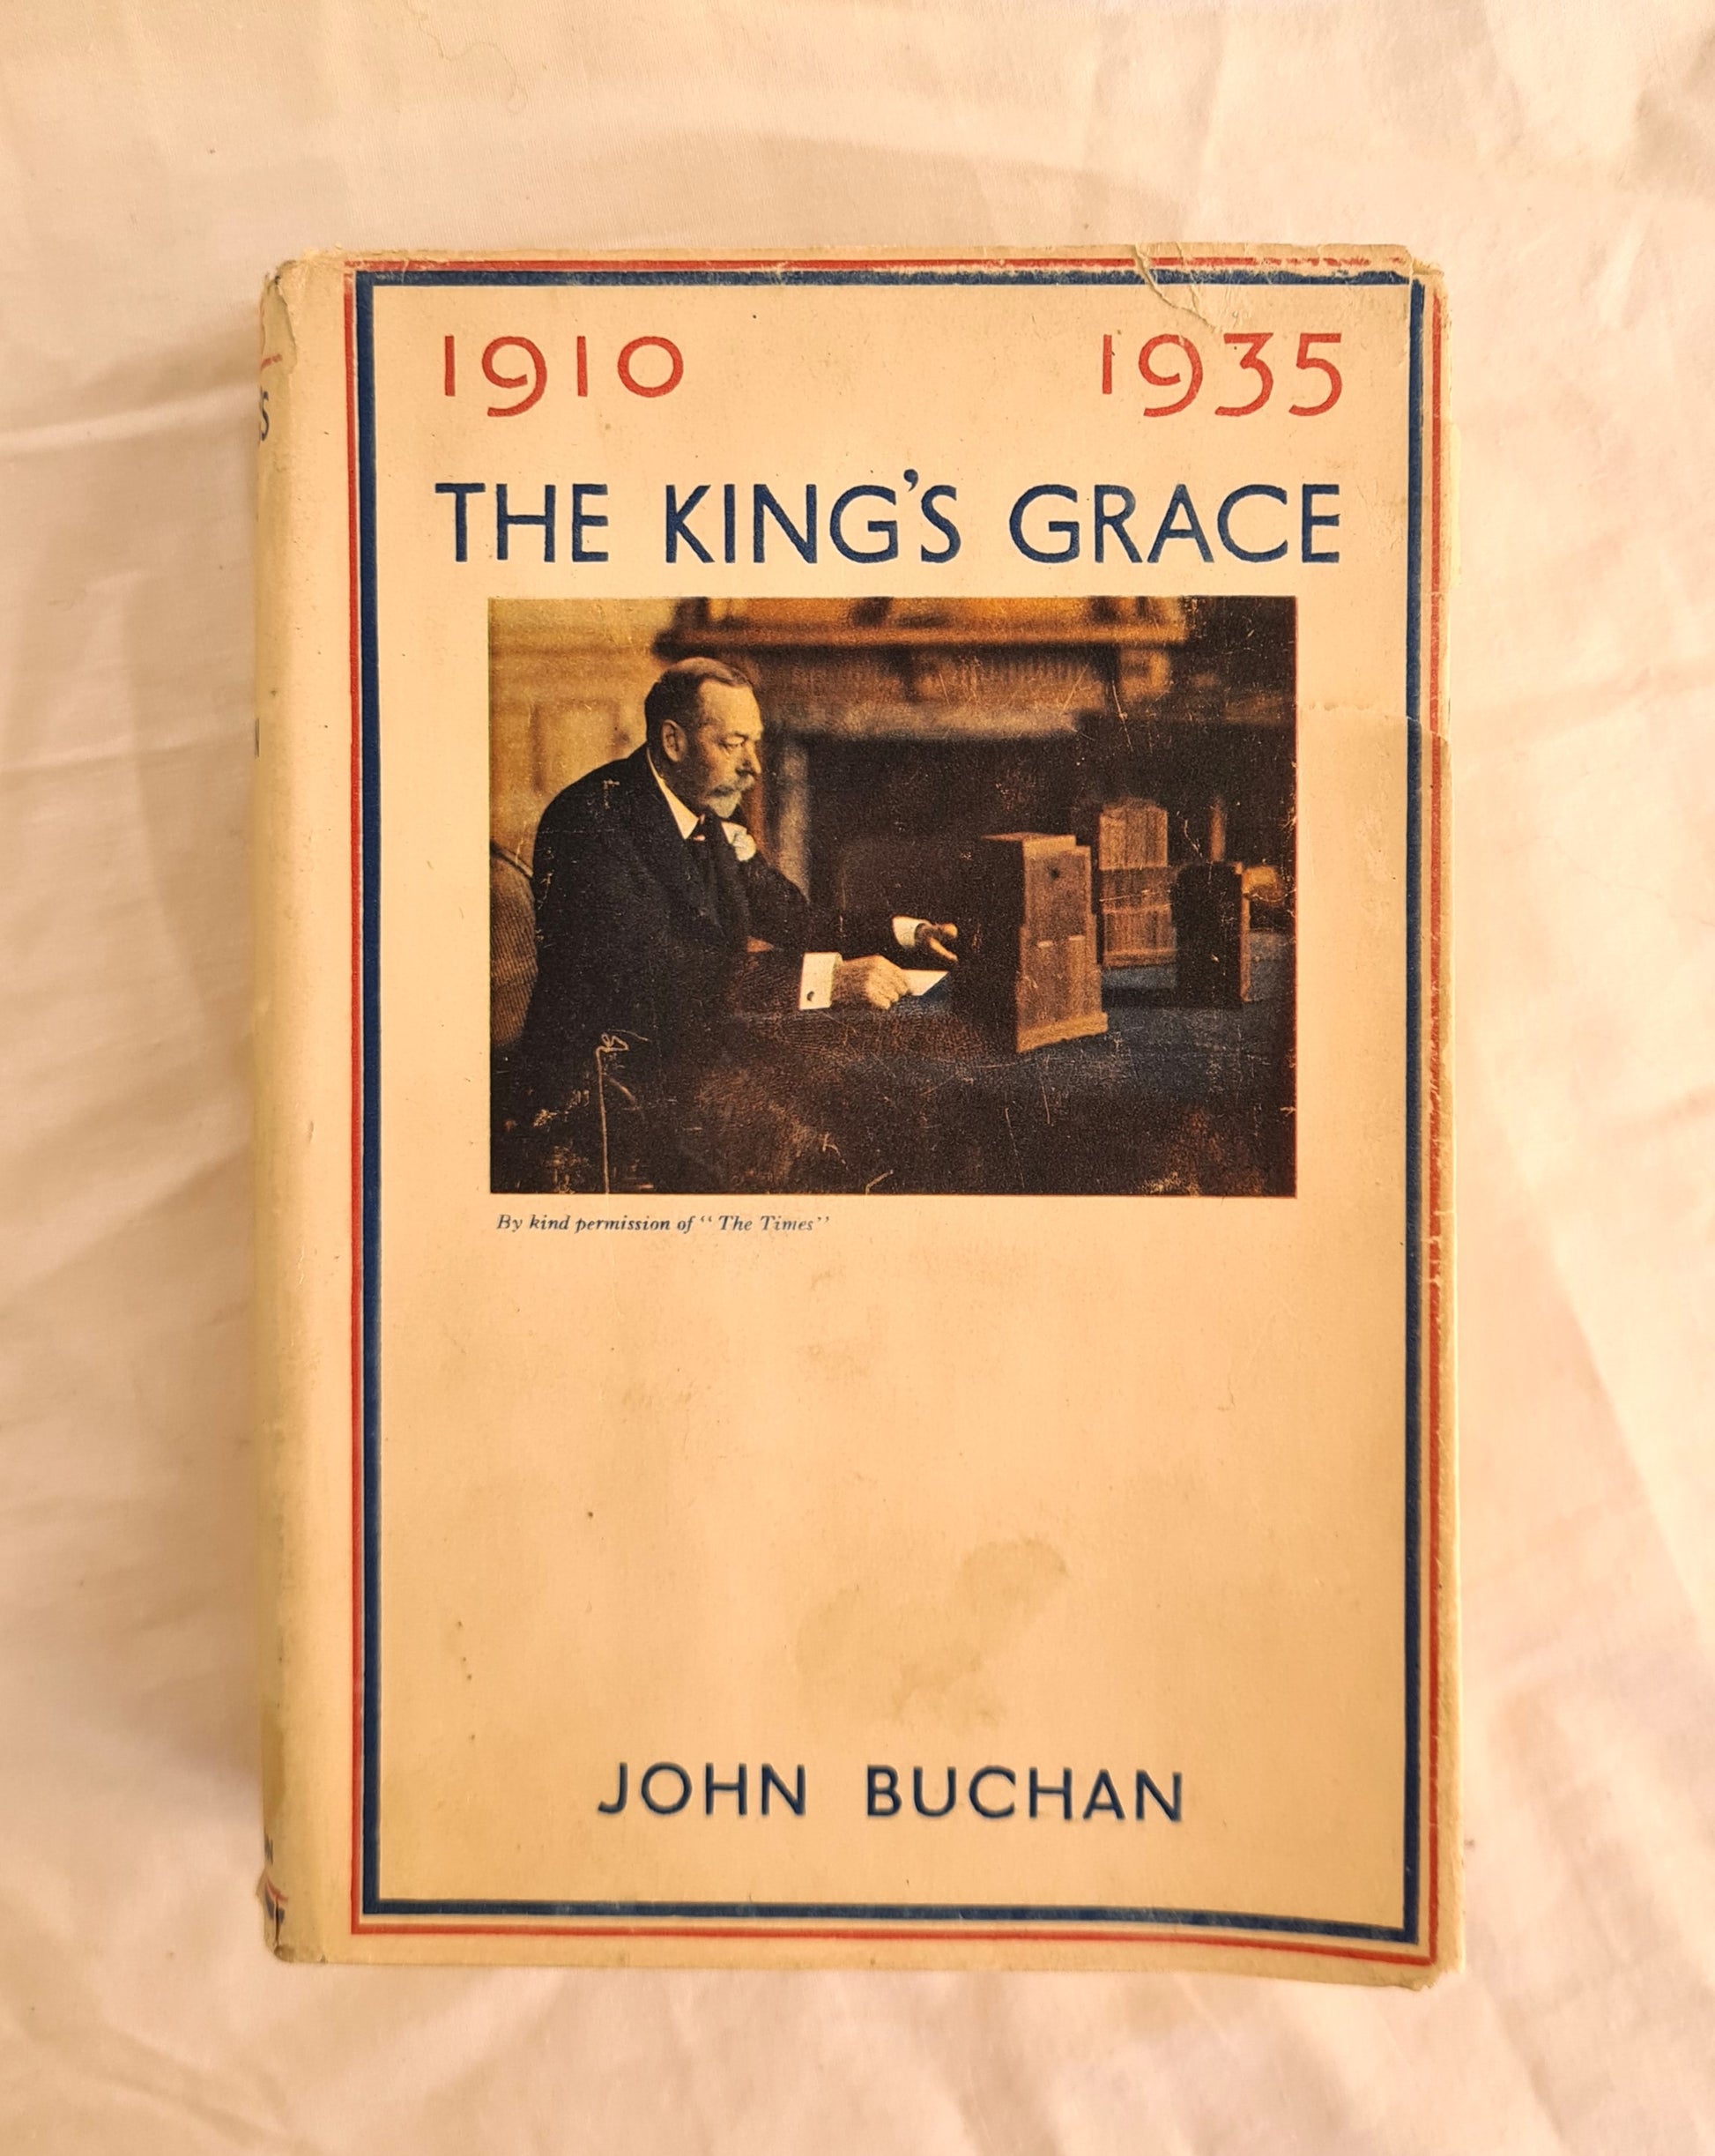 The King’s Grace 1910-1935 by John Buchan